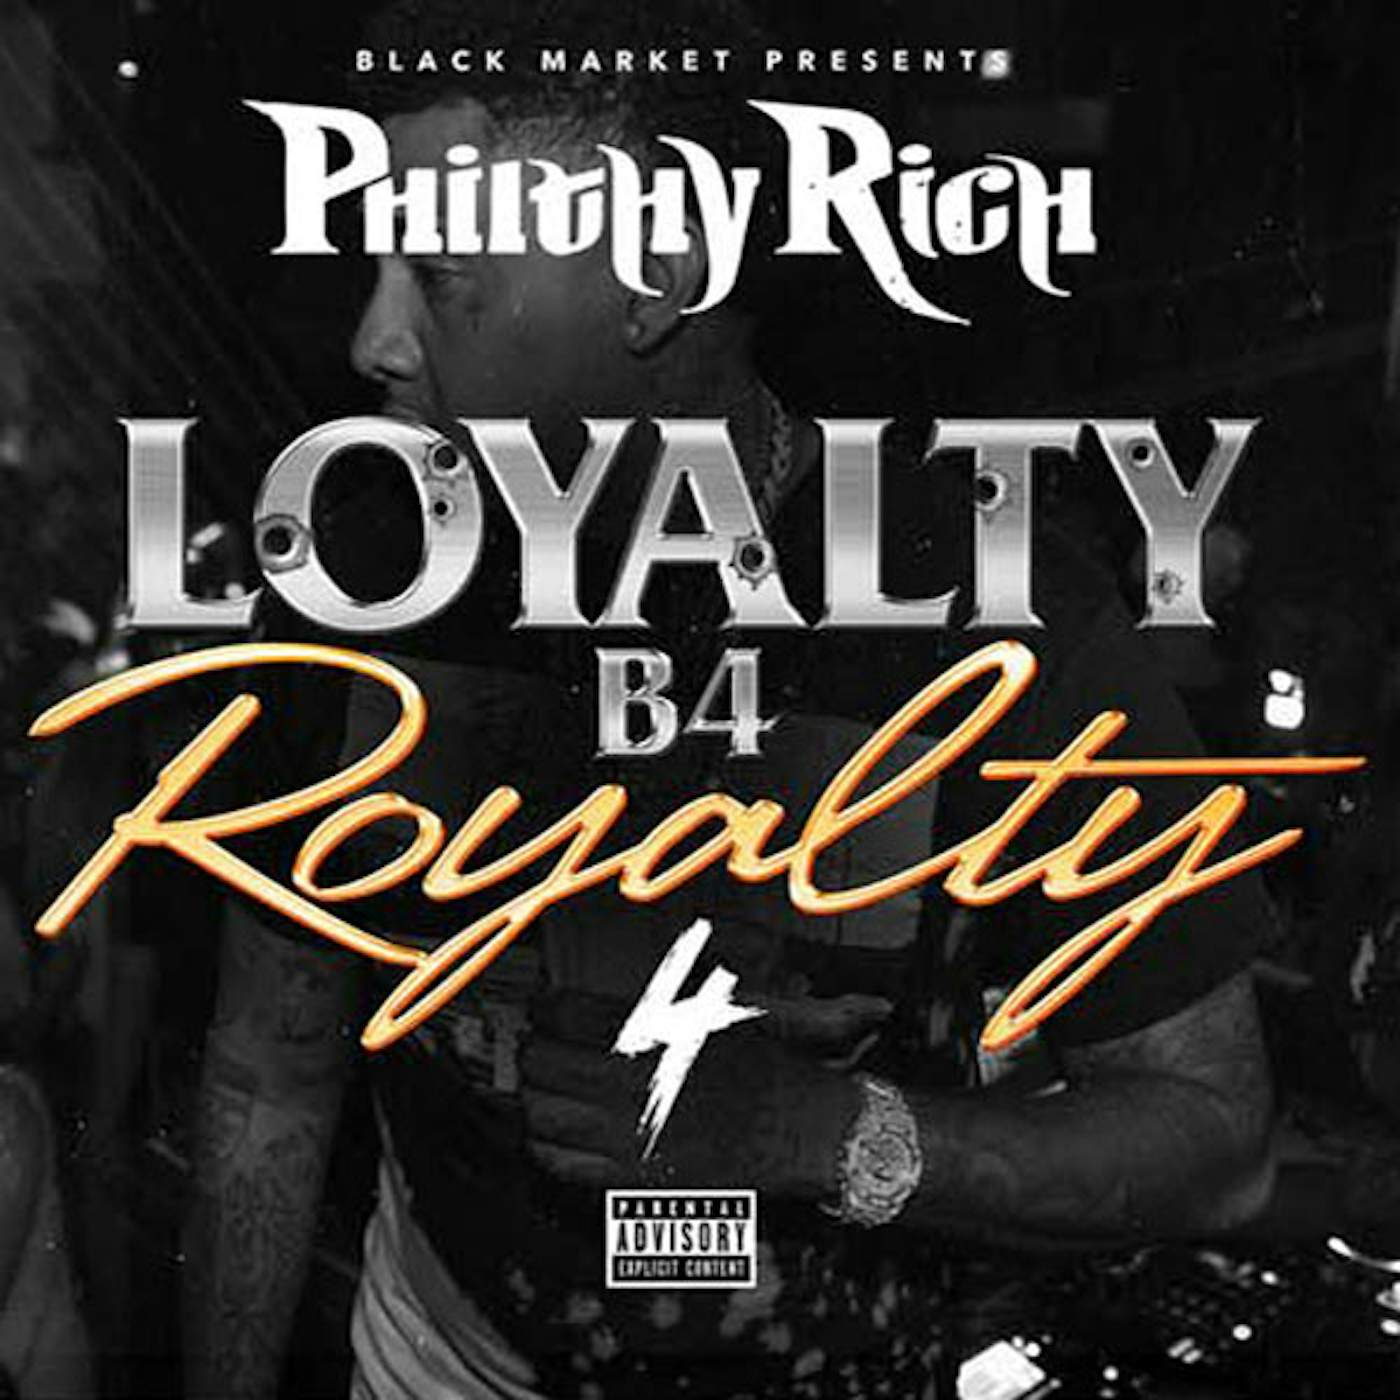 Philthy Rich LOYALTY B4 ROYALTY 4 CD